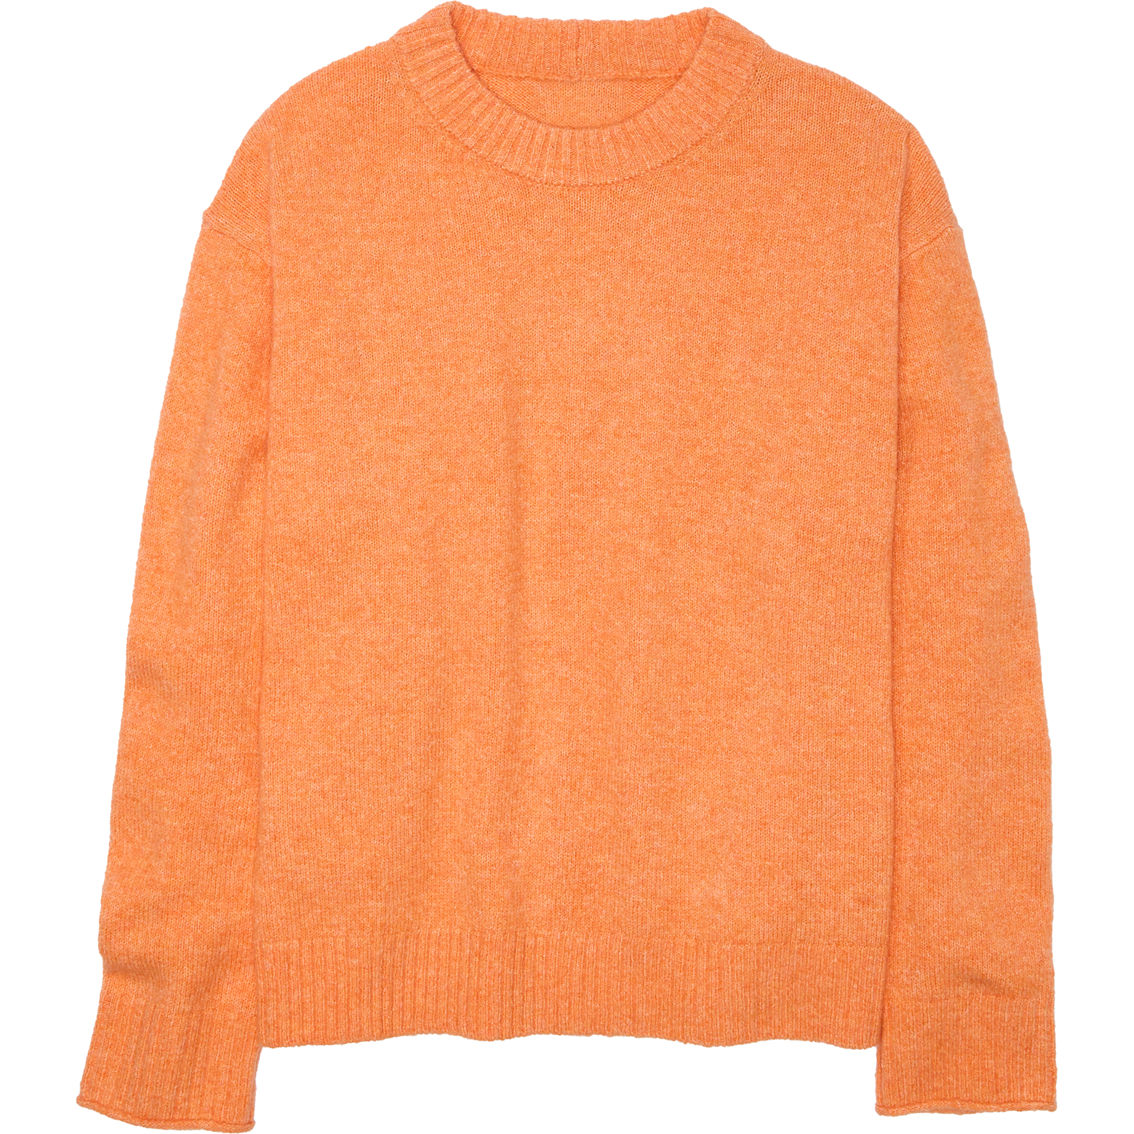 American Eagle Juniors Whoa So Soft Crewneck Sweater | Tops | Clothing ...